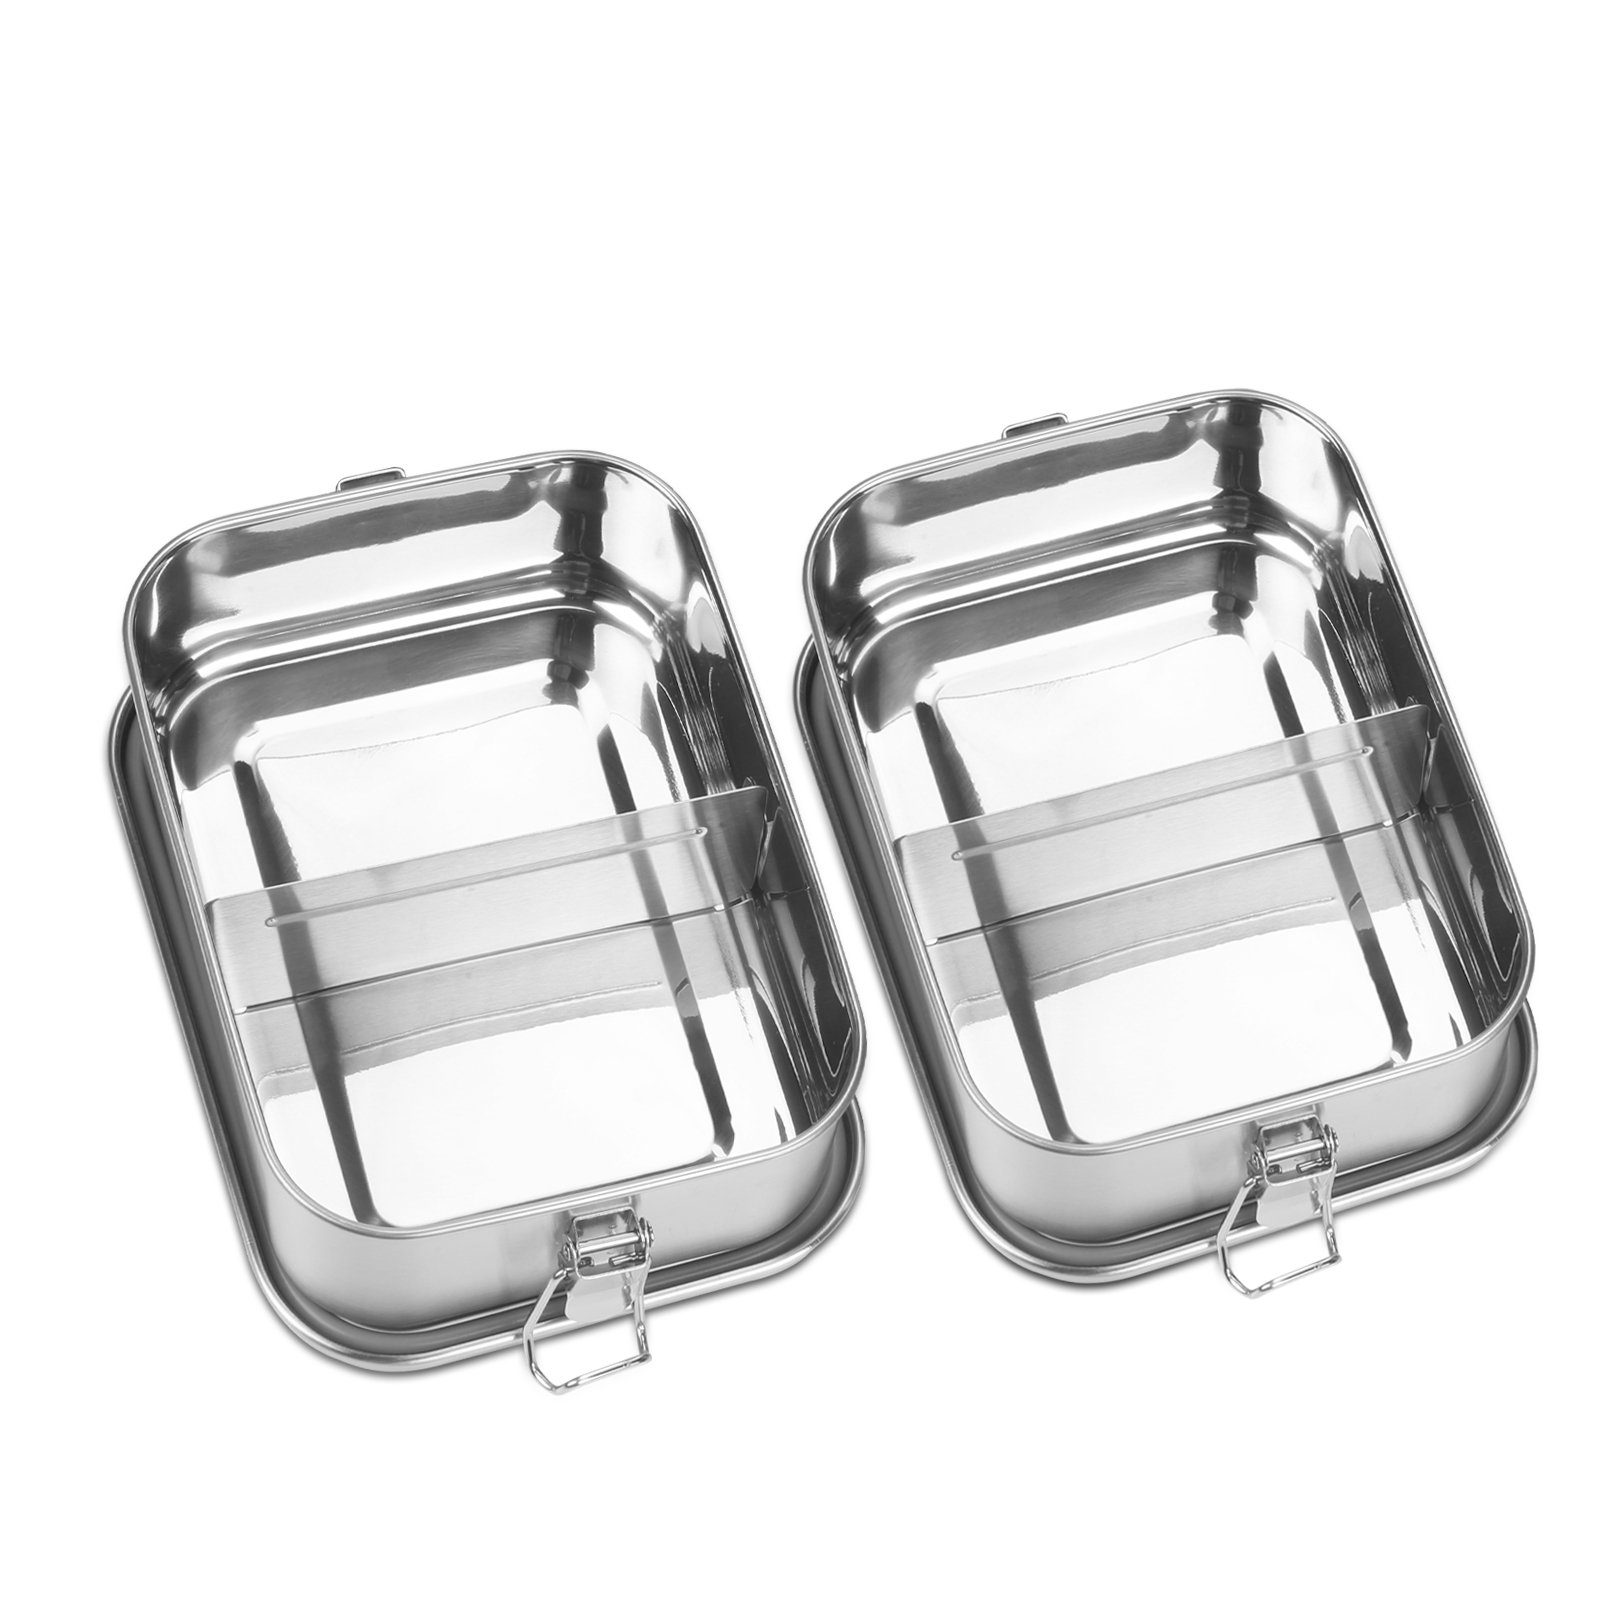 Brotdose (abnehmbar) Clanmacy frei Silber Metall Fächern BPA Lunchbox Lunchbox Brotdose Thermobehälter 800-1400ml 1200ml Edelstahl,